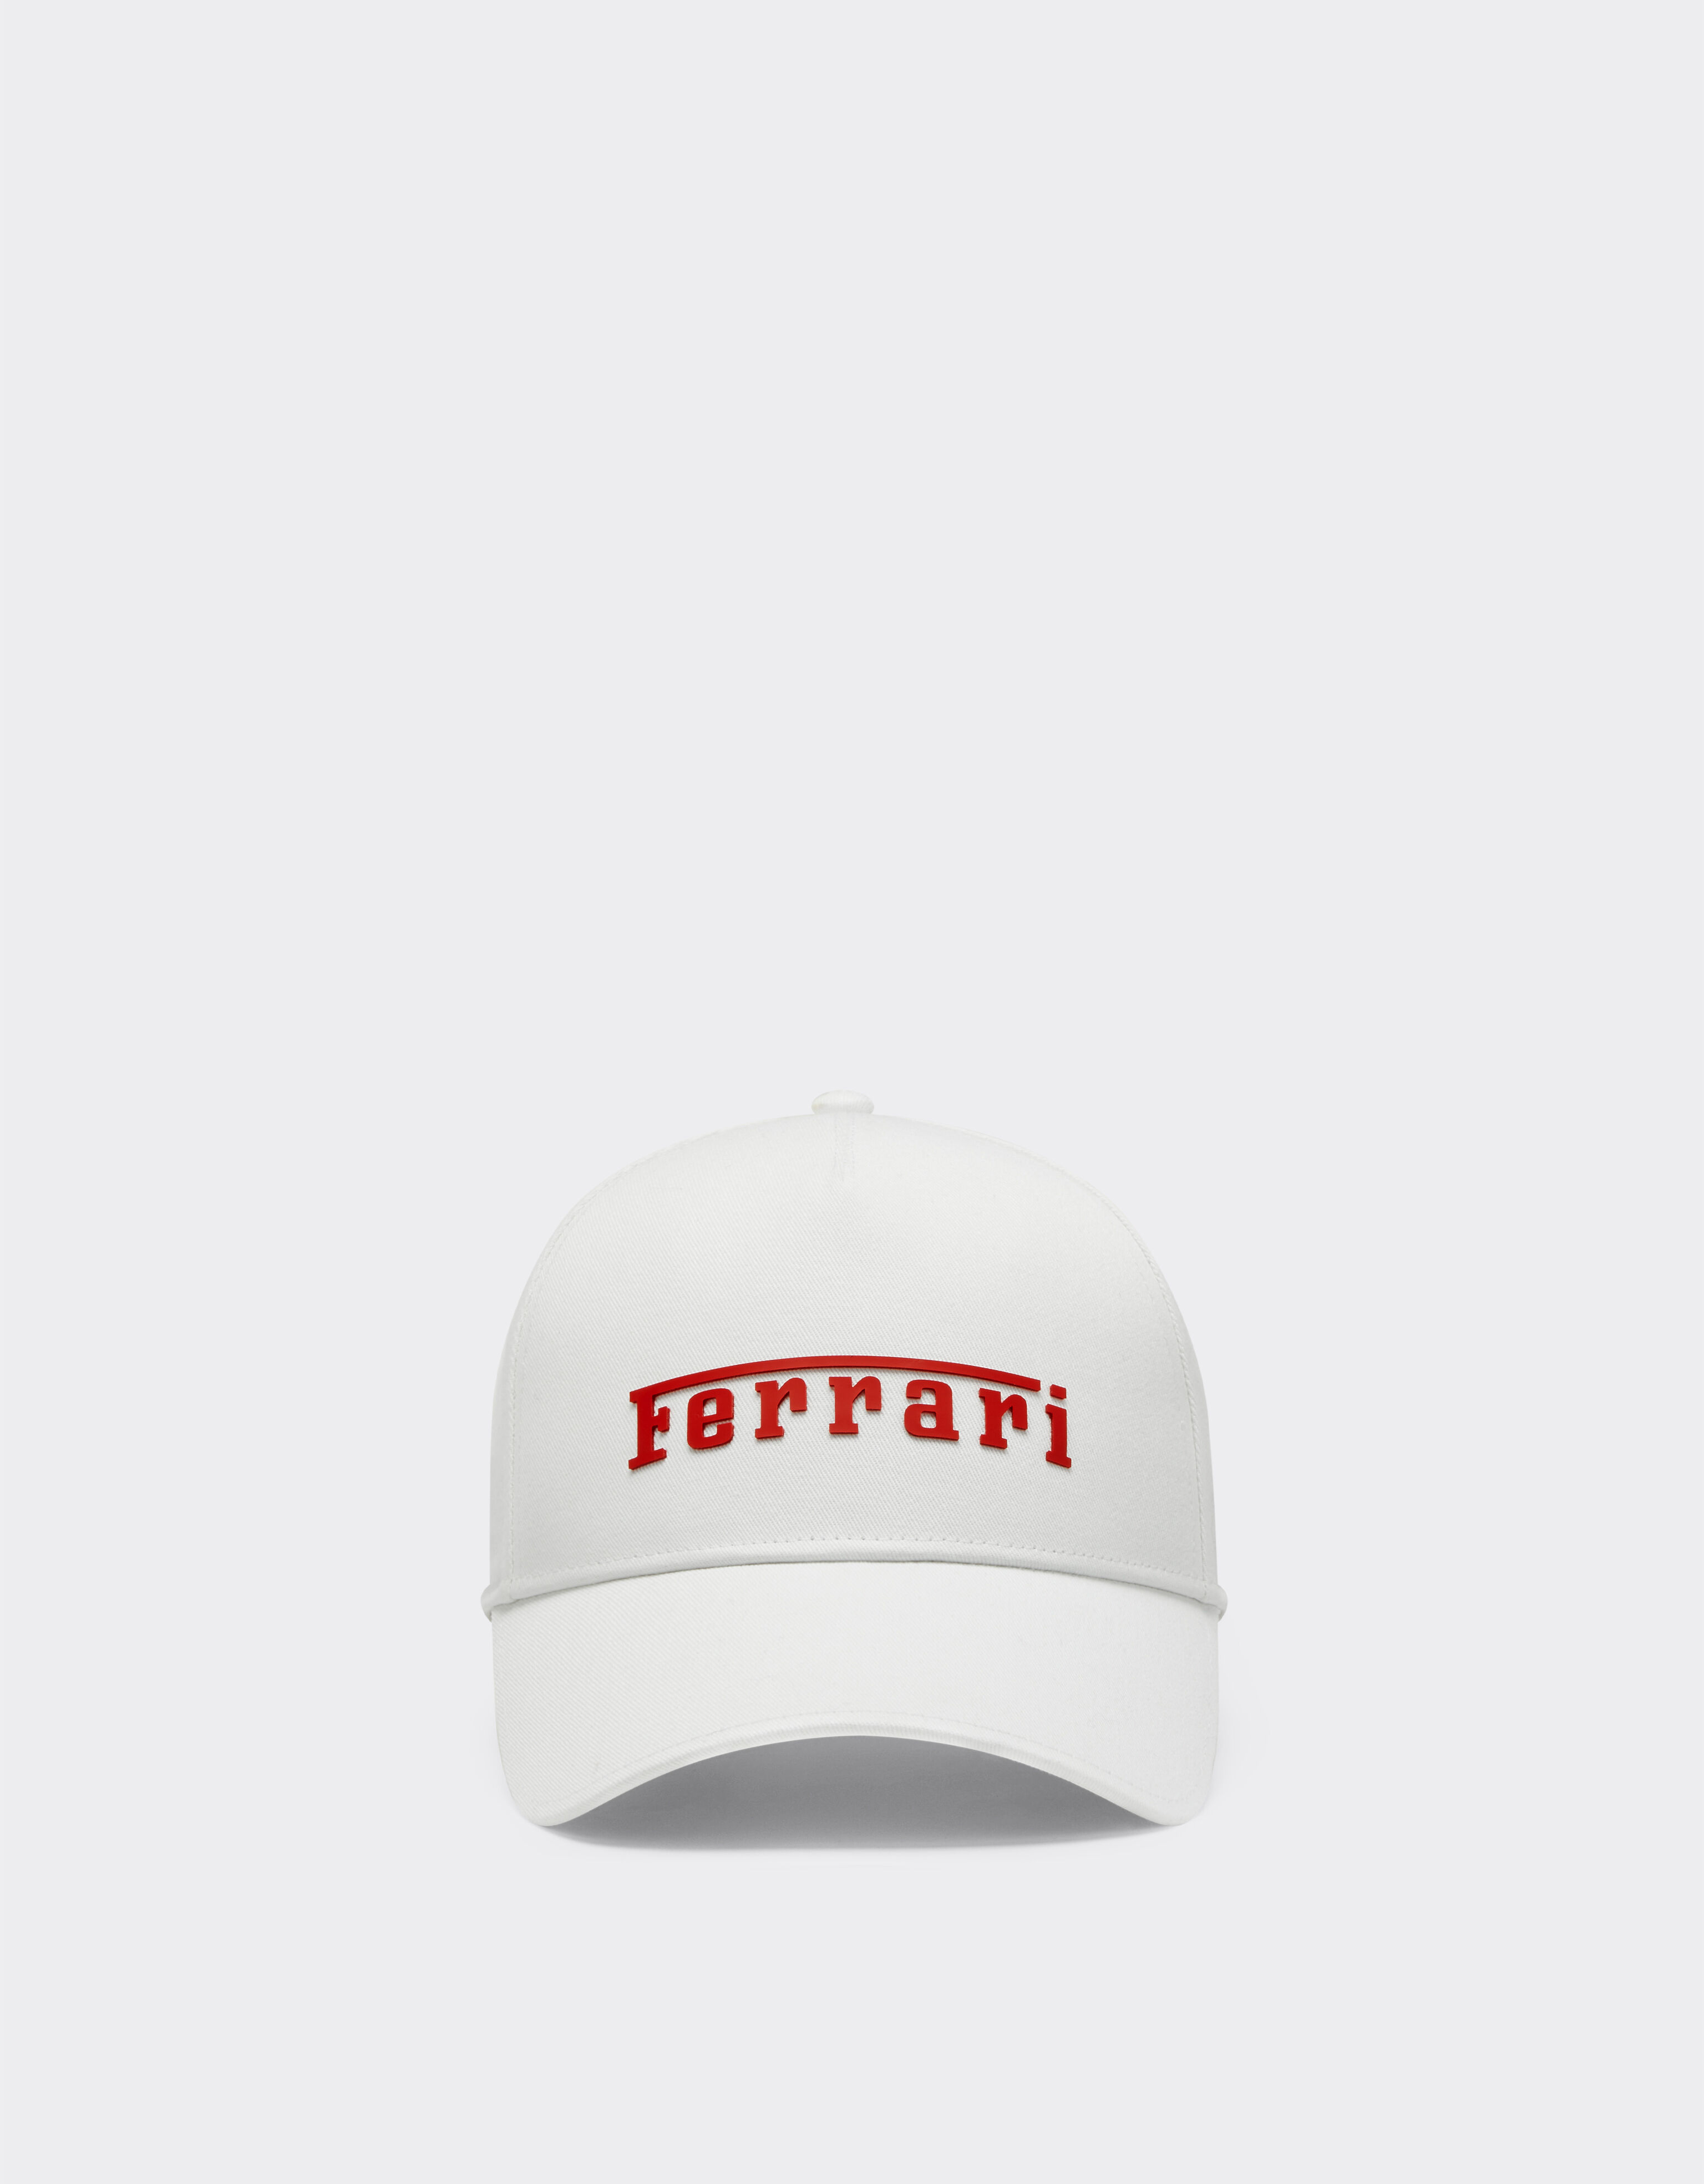 Ferrari Baseball hat with rubberised logo Optical White 48490f